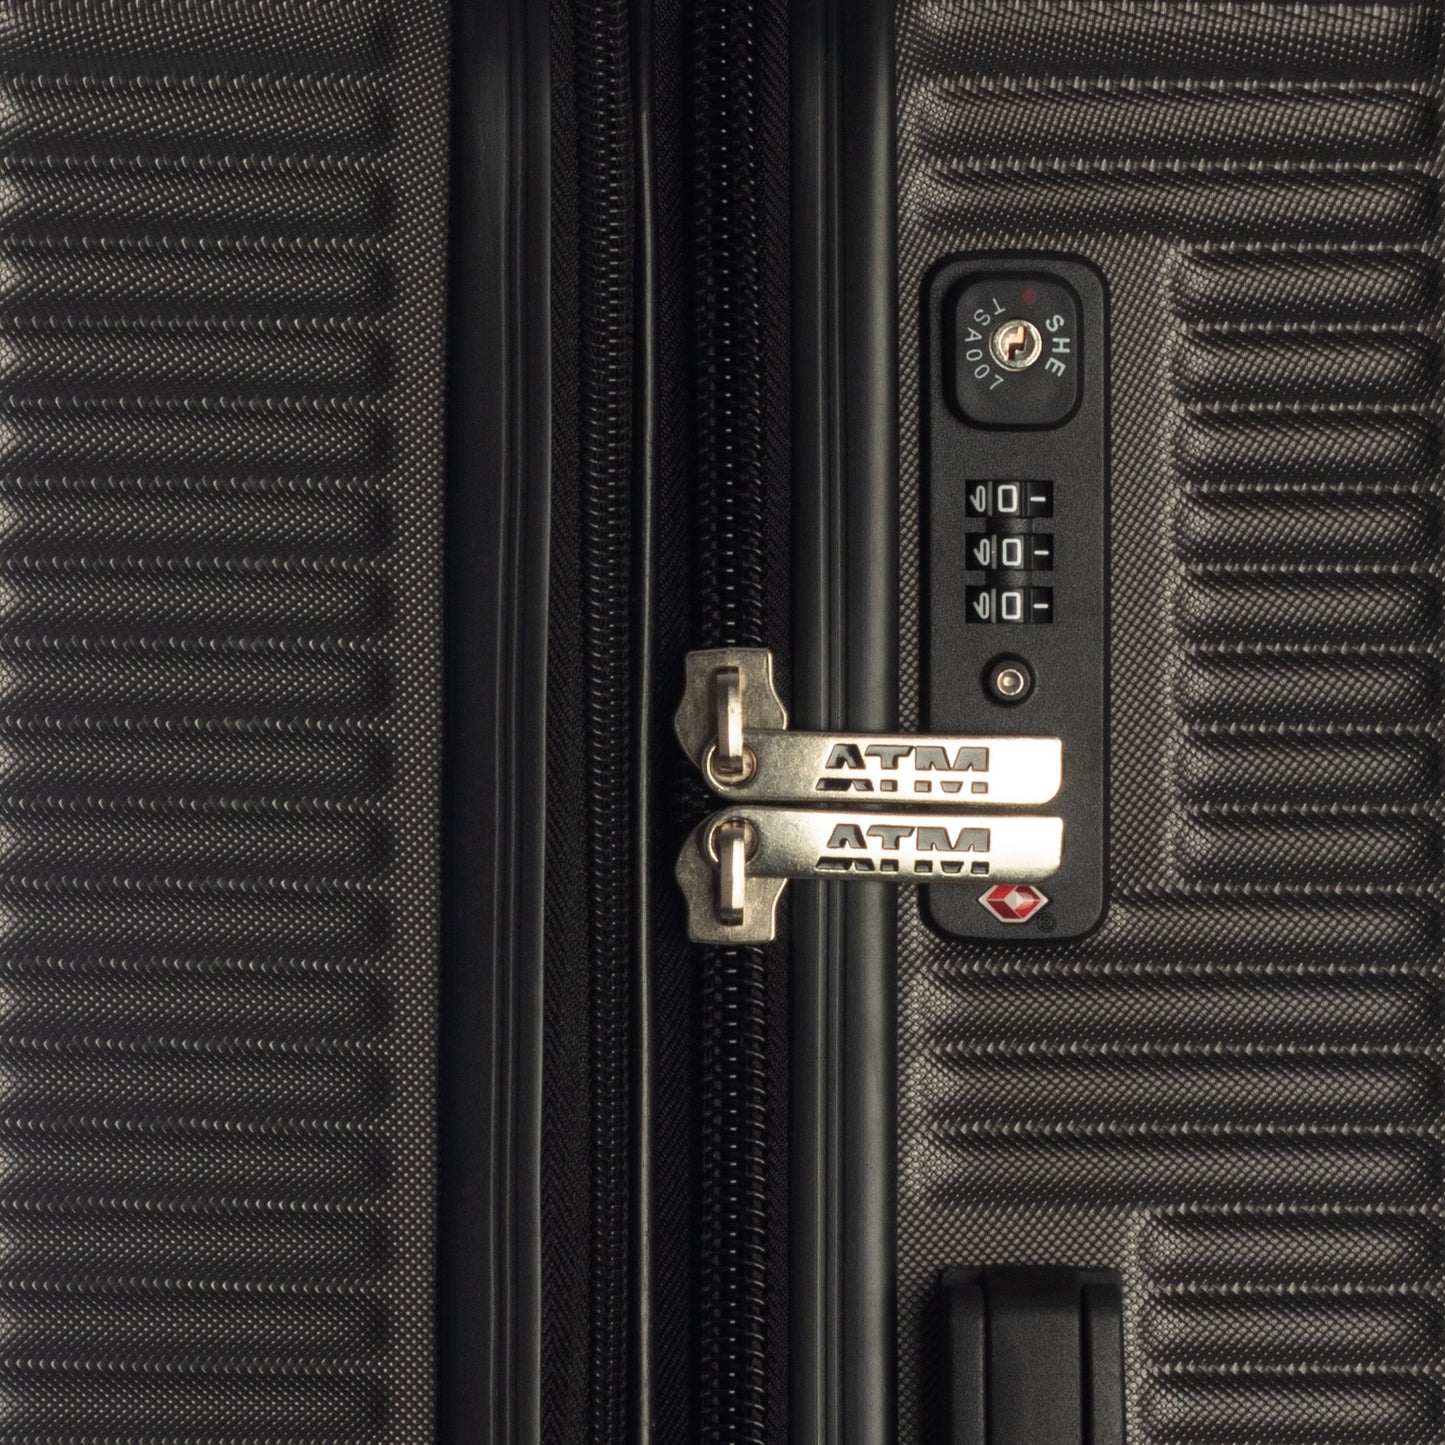 Vita collection luggage black (18/22/26/30") Suitcase Lock Spinner